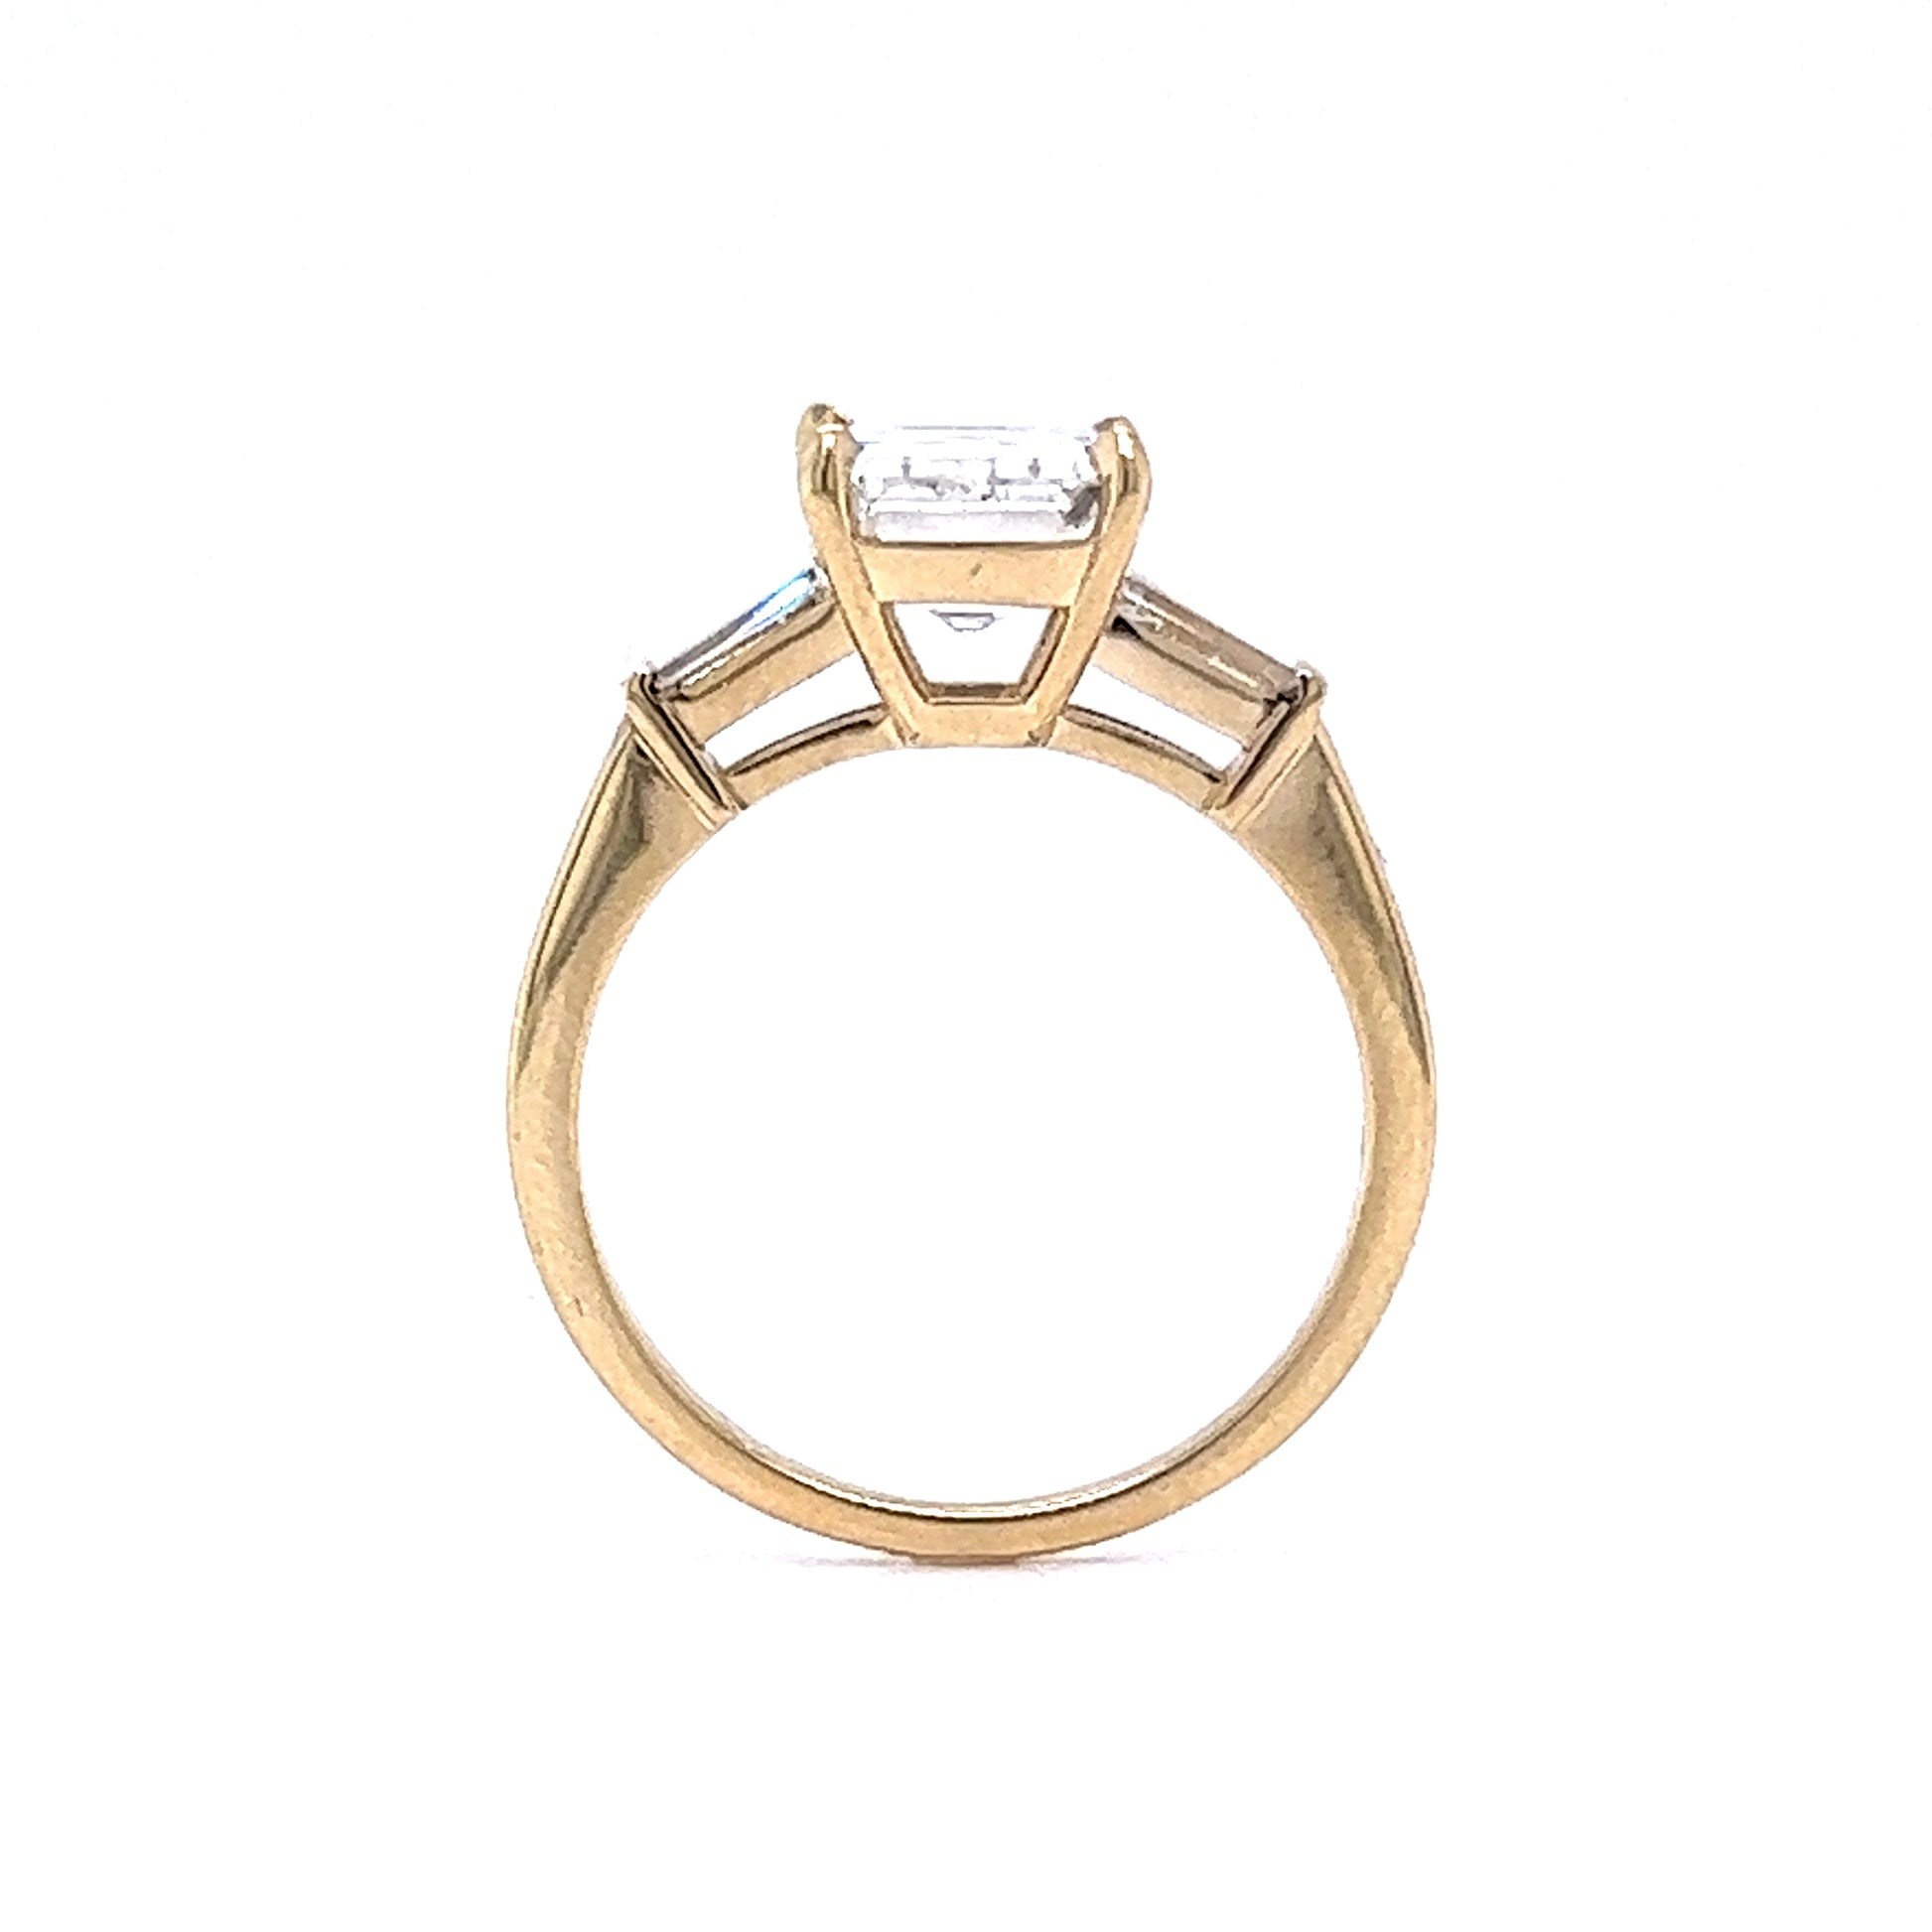 2.06 Emerald Cut Diamond Engagement Ring in 14k Yellow Gold